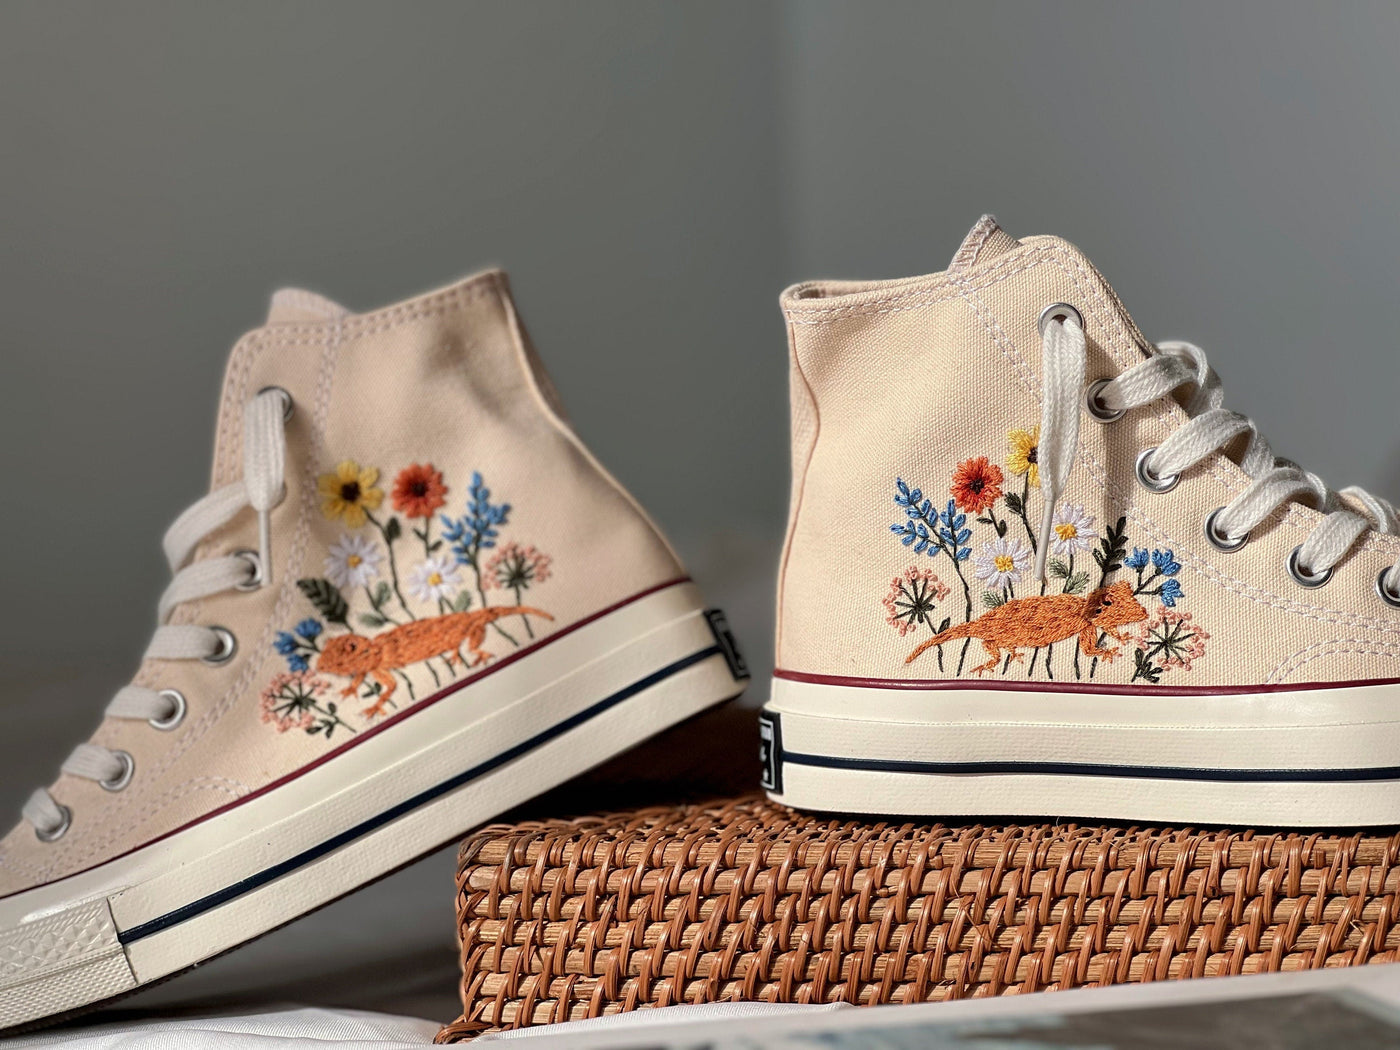 Embroidered Converse High Tops,Flower Converse,Custom Converse Pet